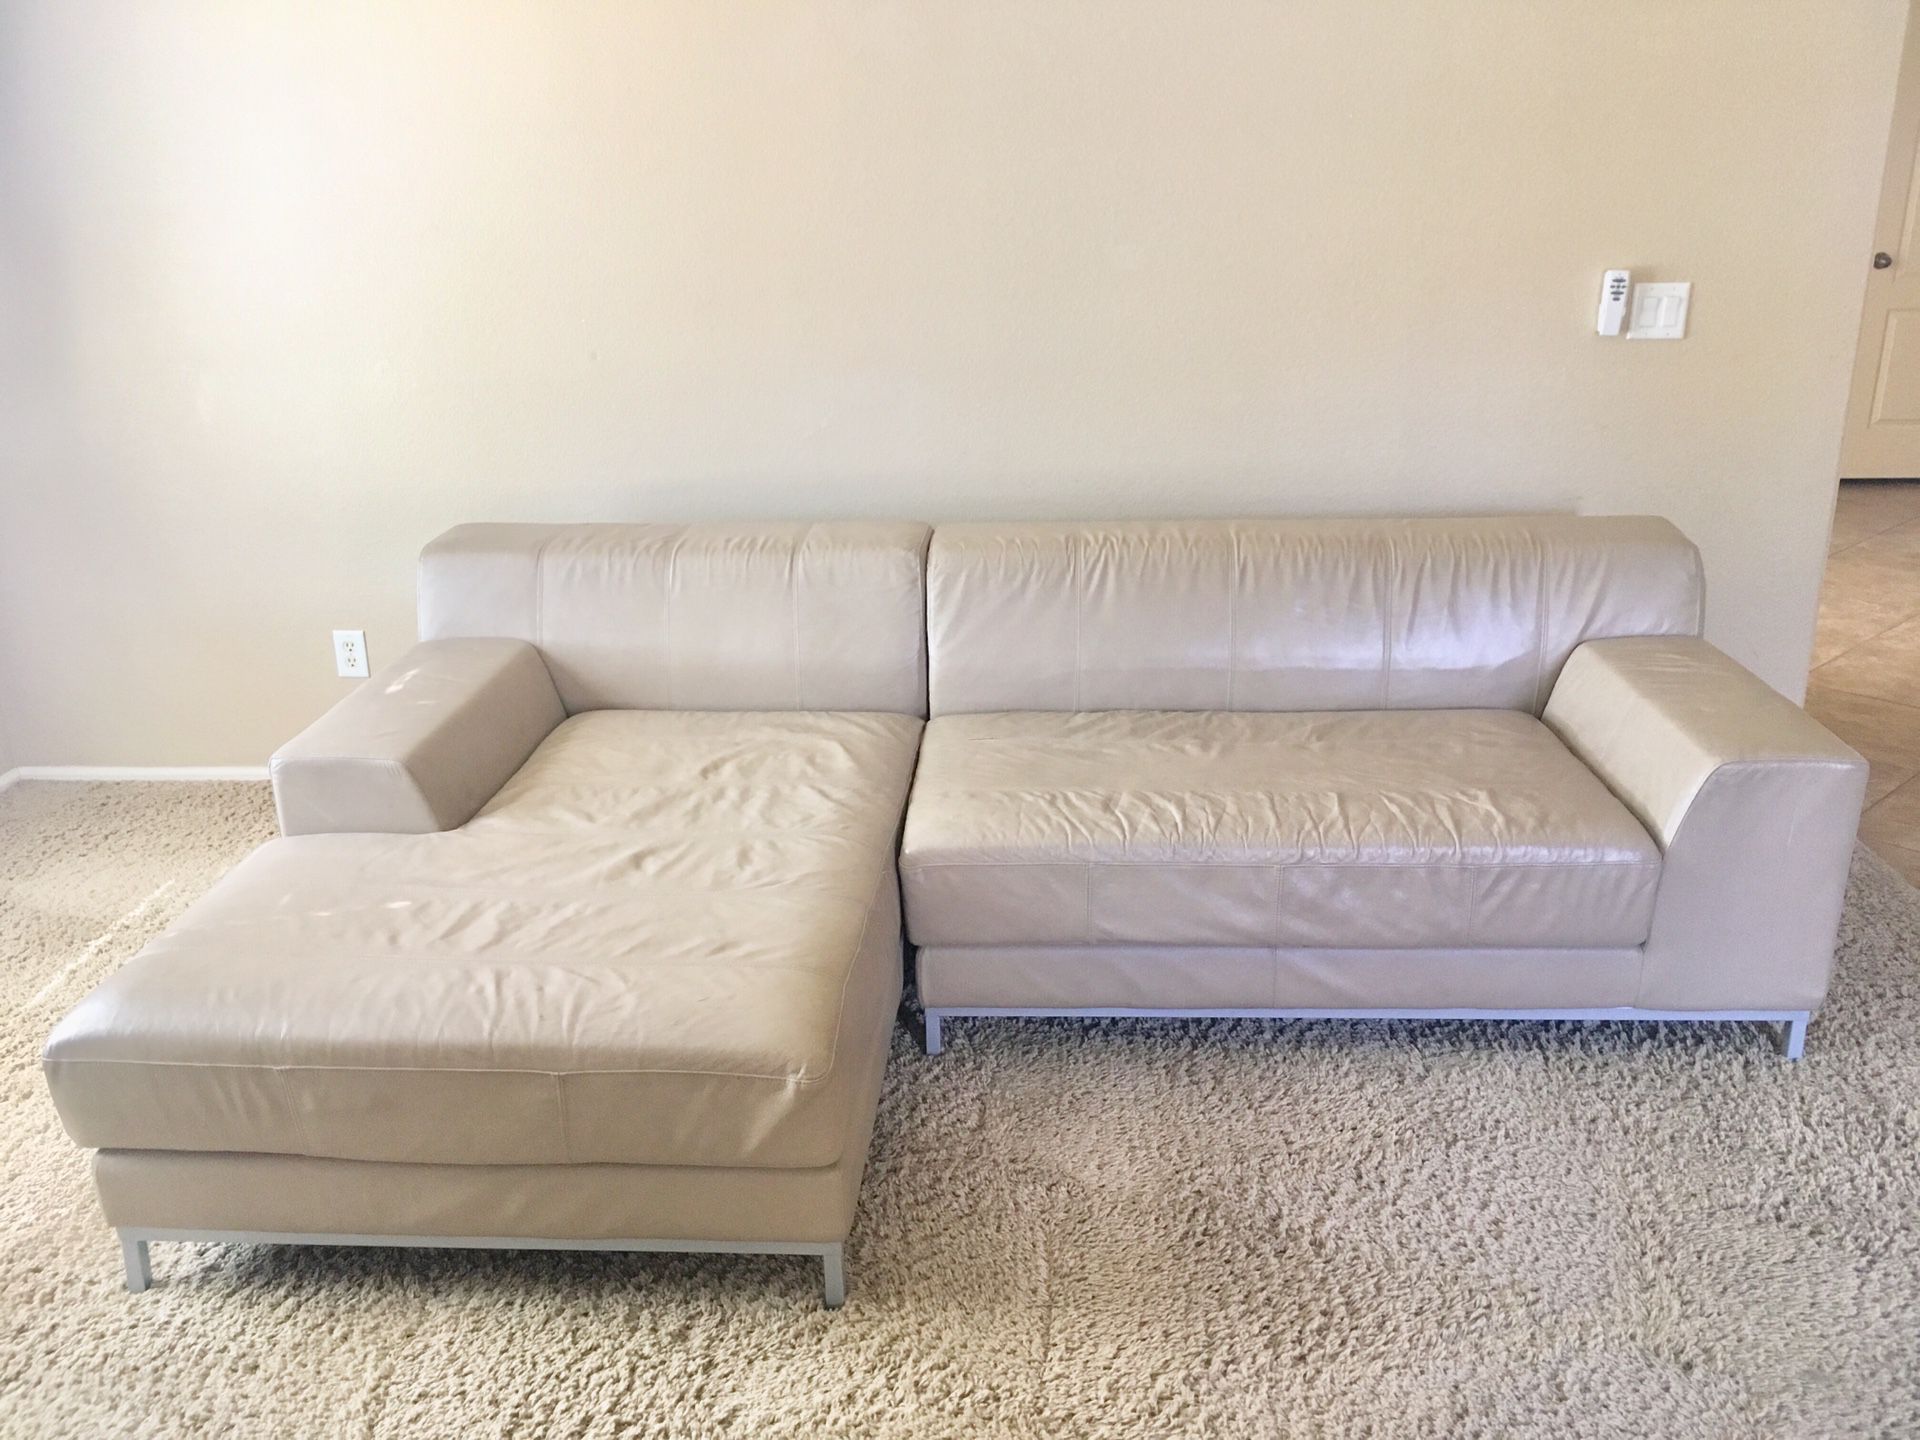 Ikea Kramfors sofa couch